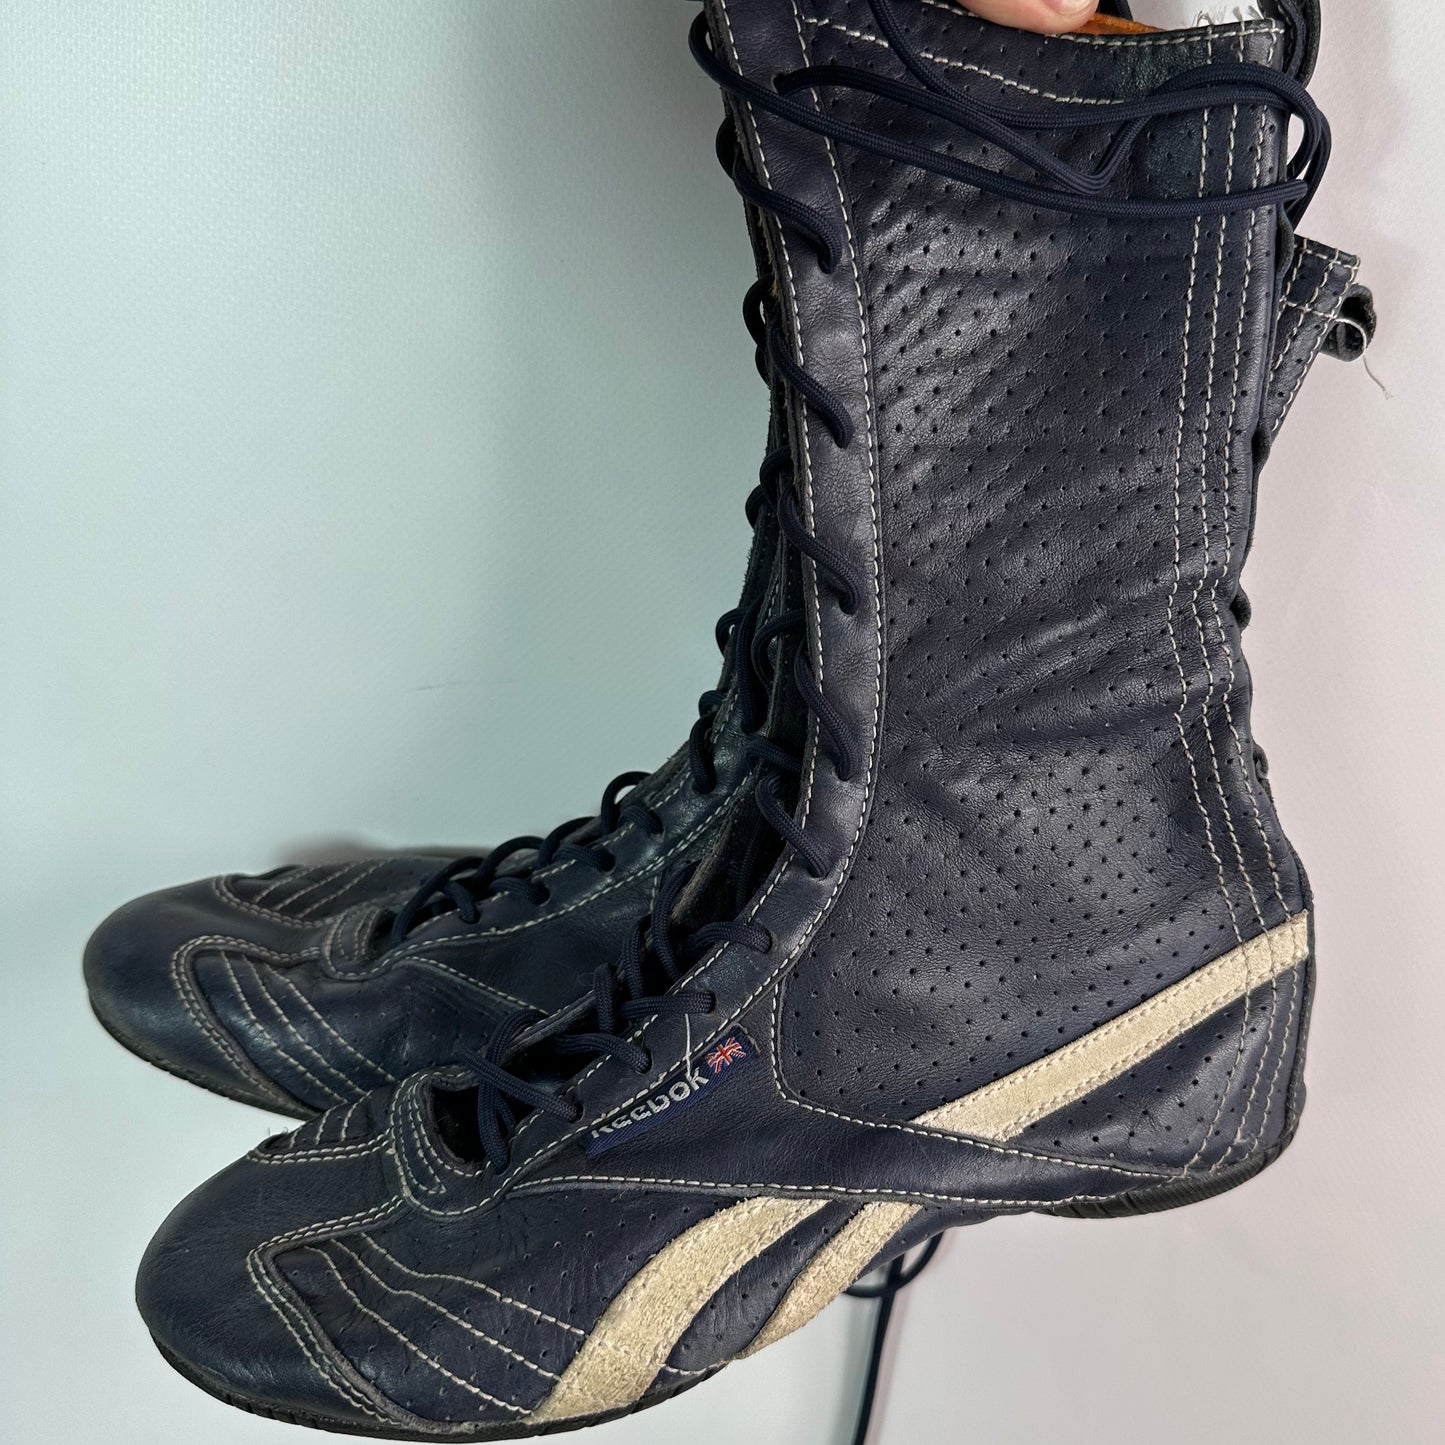 Reebok Vintage Leather Boxing Wrestling Boots